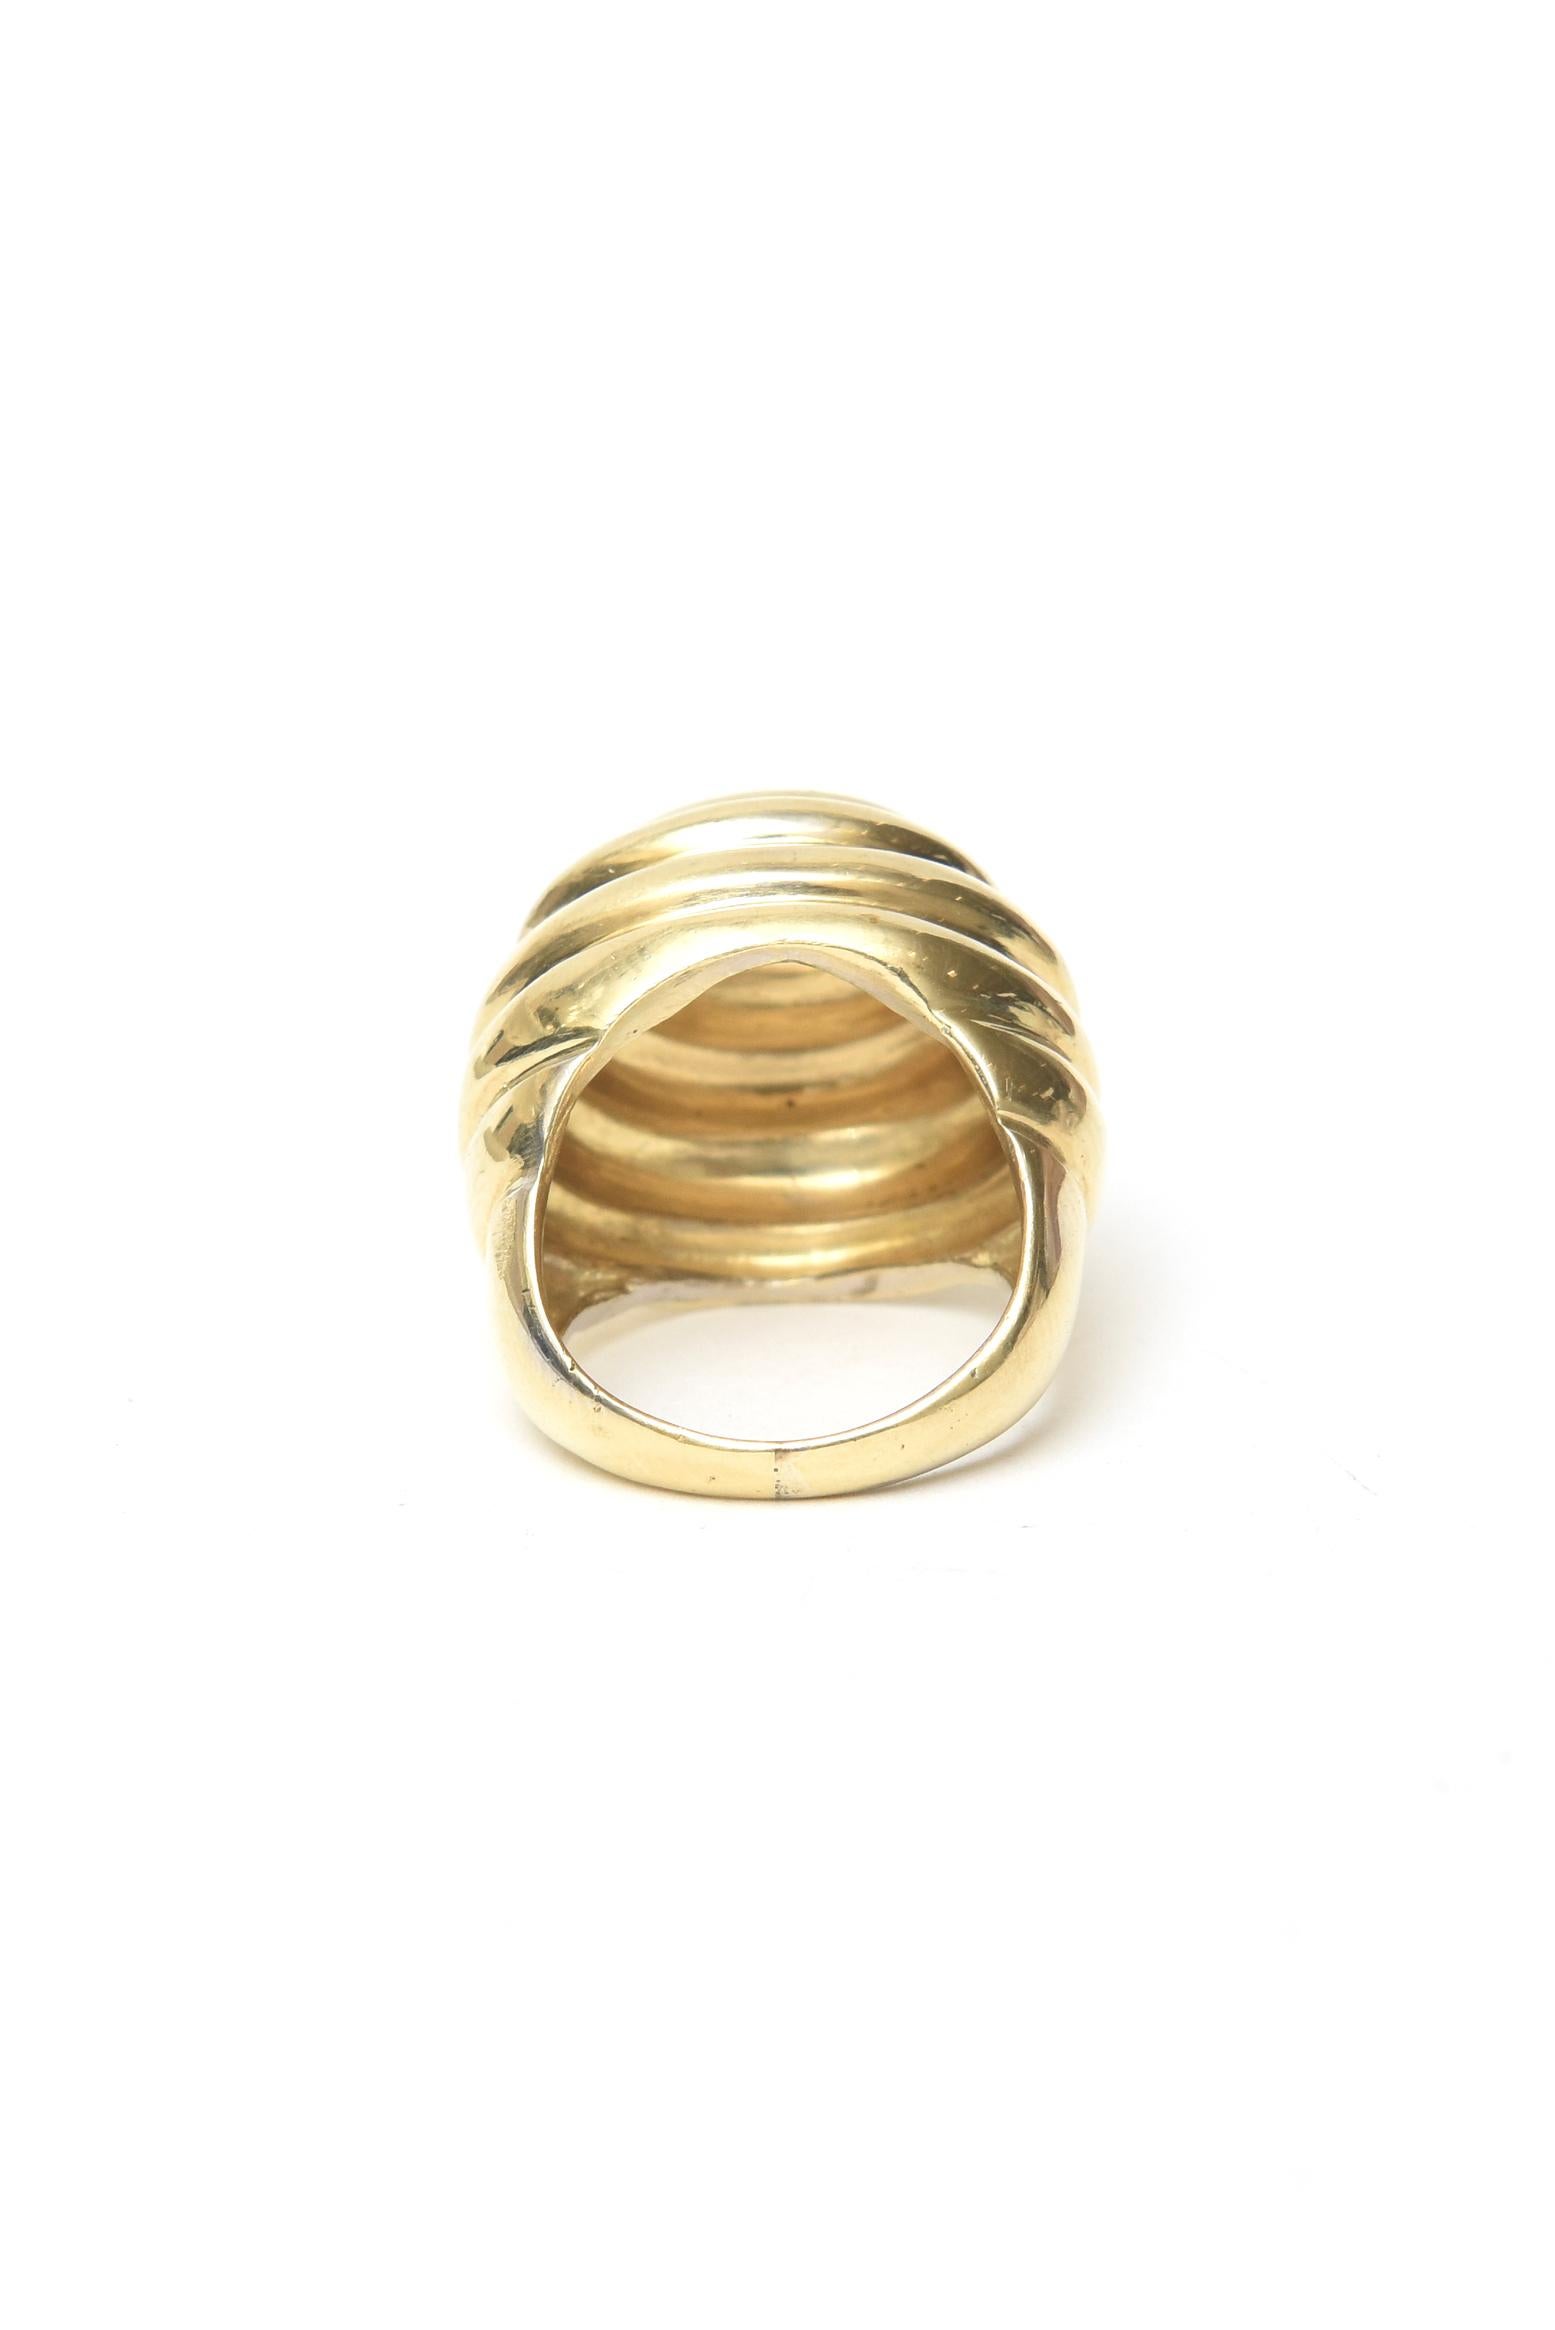 Modern 14 Karat Gold Spiral Dome Ring Vintage